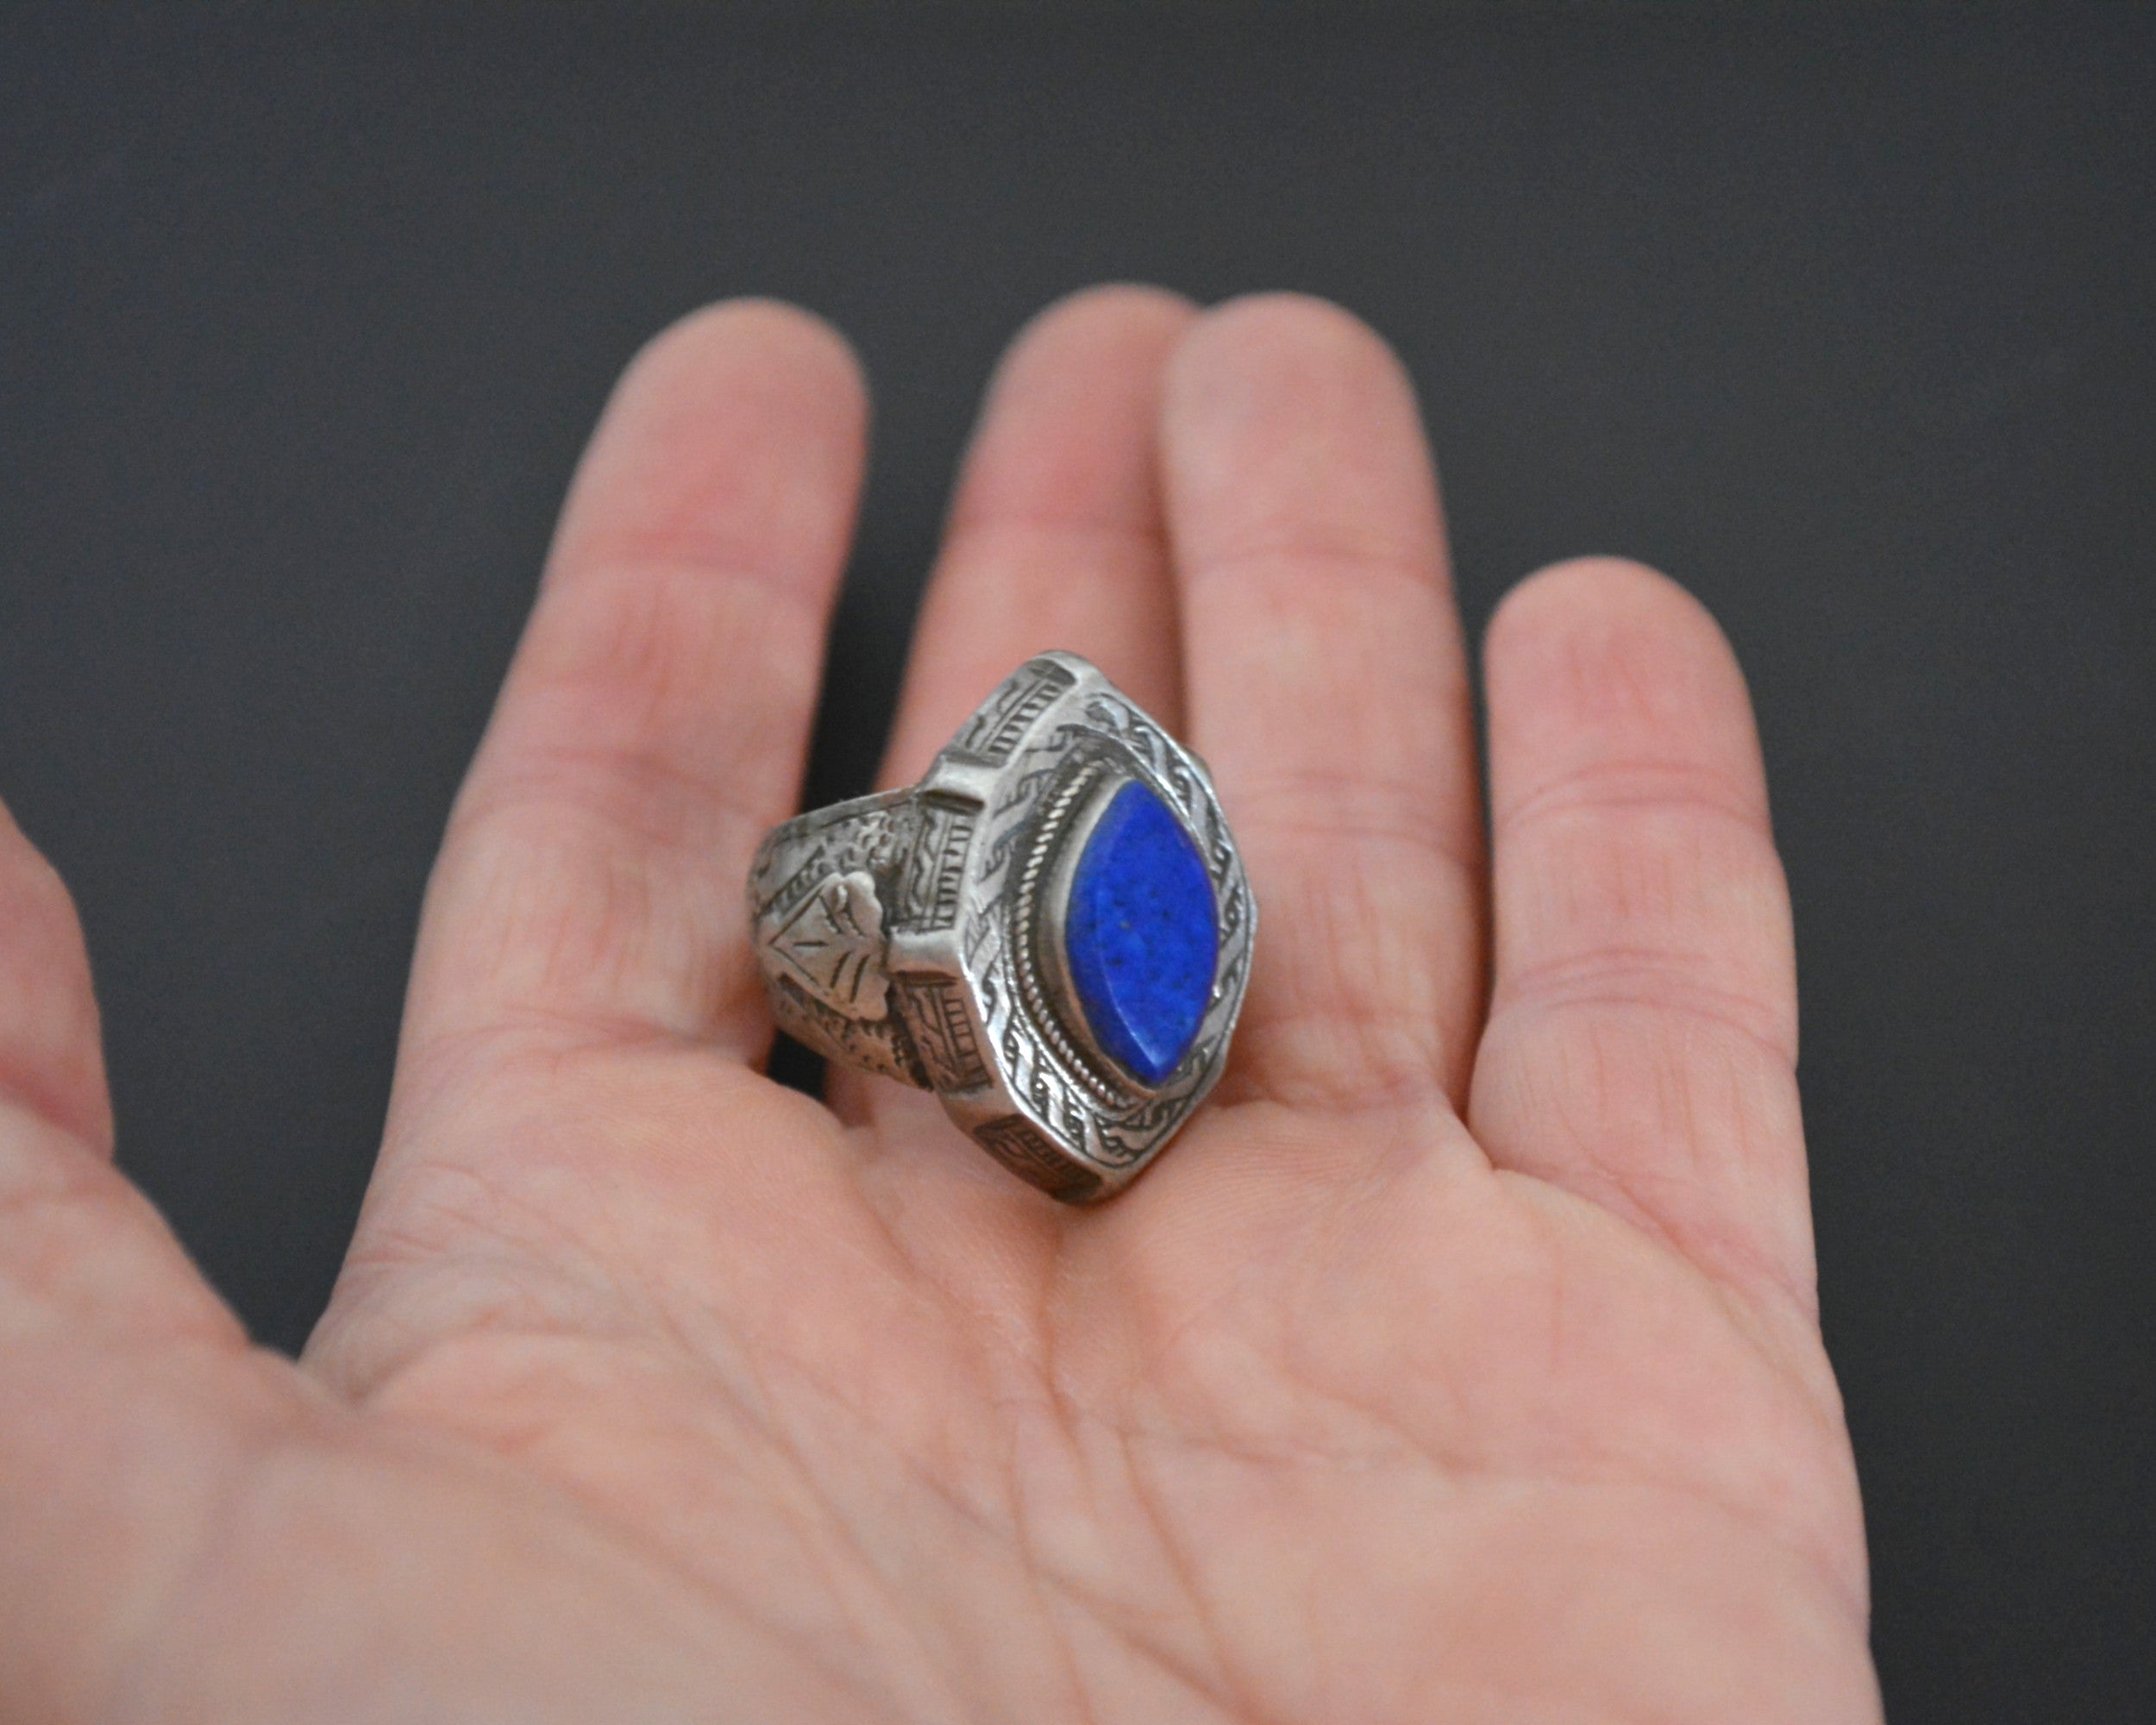 Afghani Lapis Lazuli Ring - Size 8